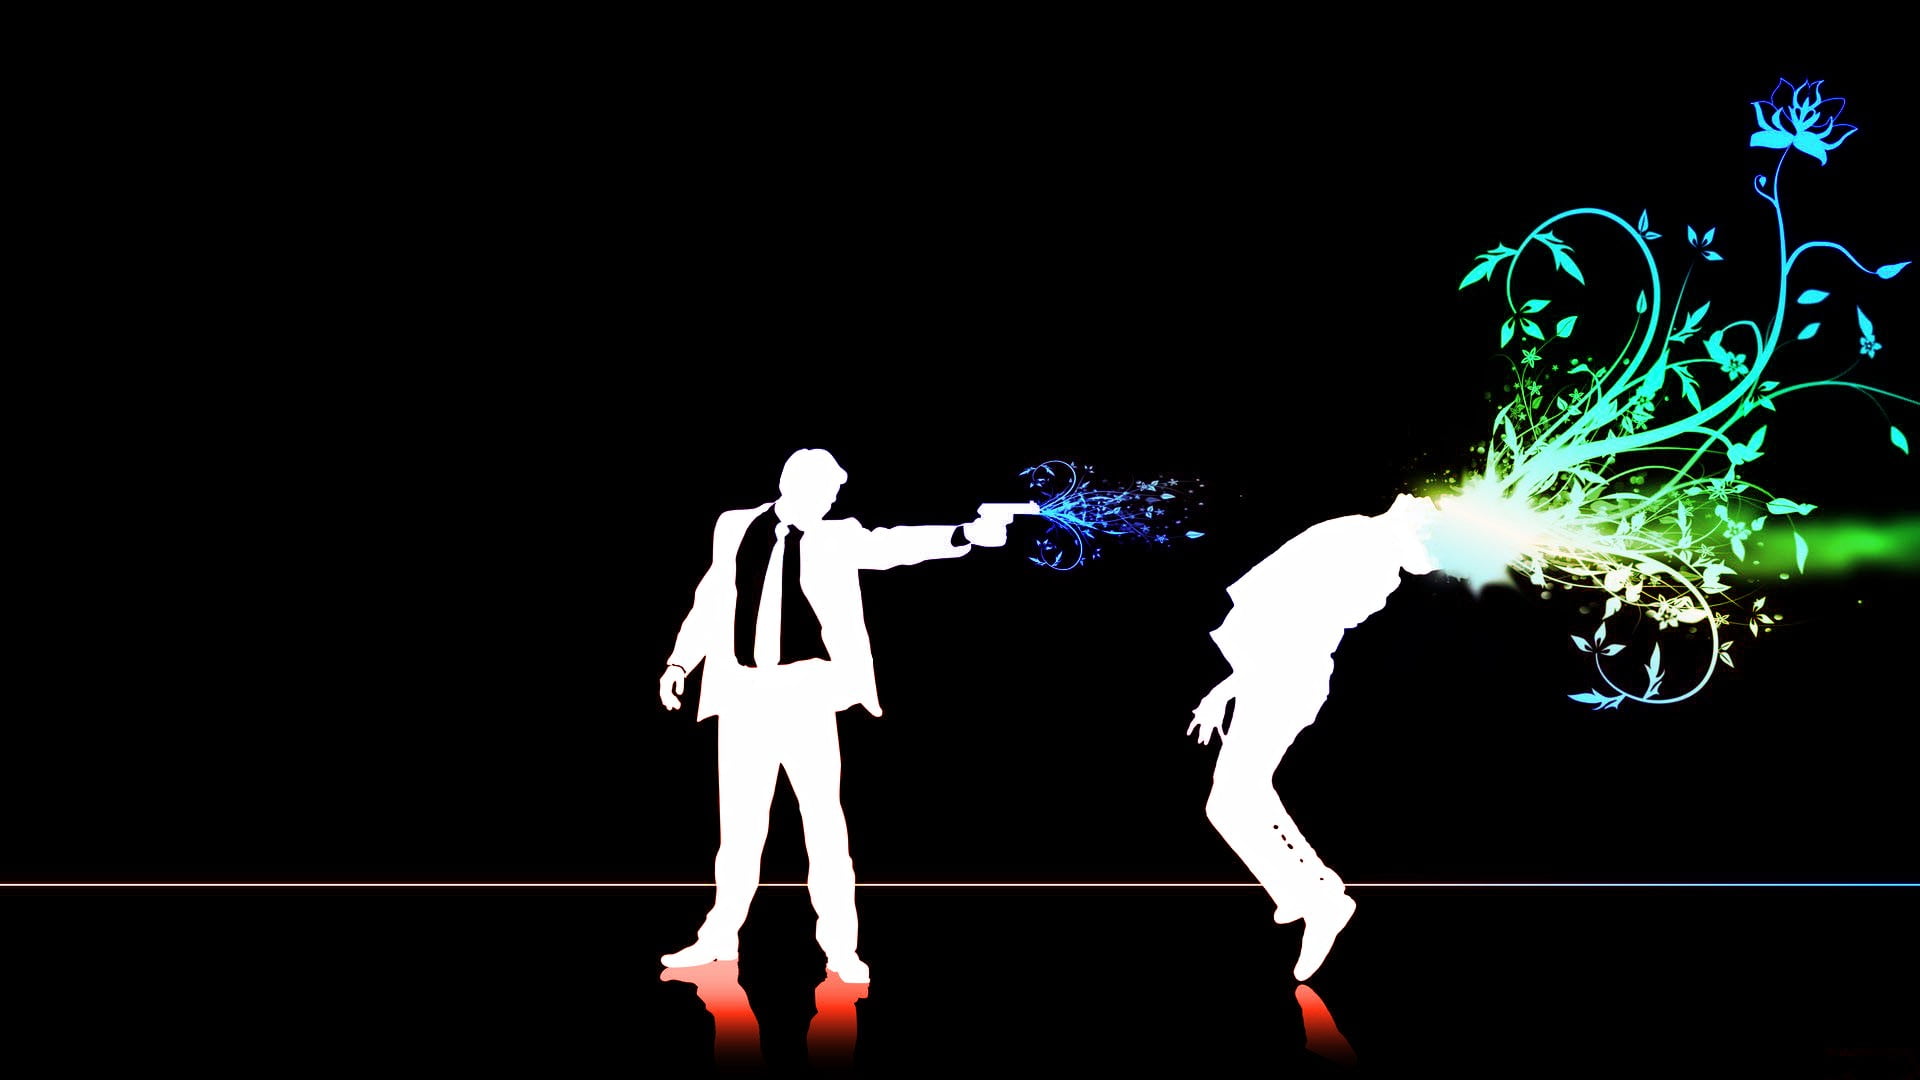 man in suit jacket firing gun illustration, abstract, shooting